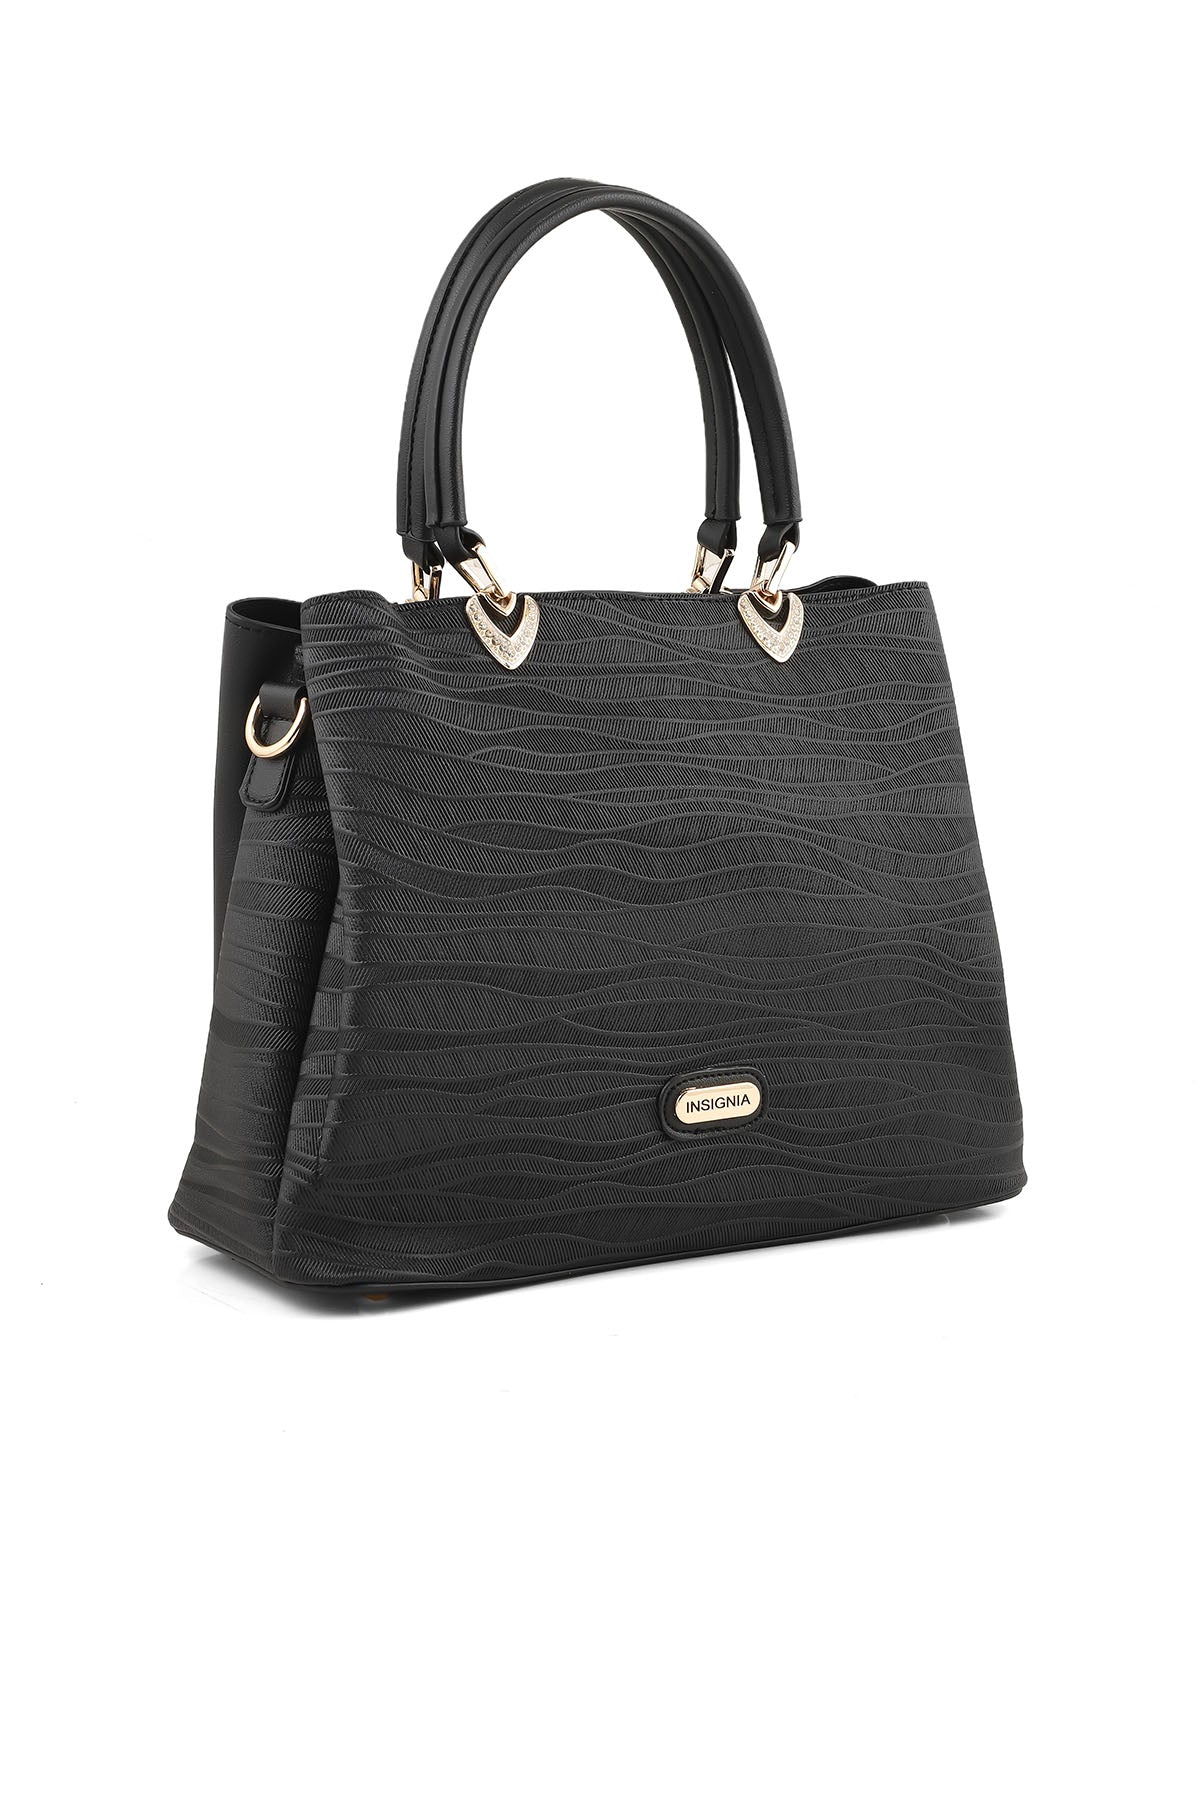 Formal Tote Hand Bags B15052-Black